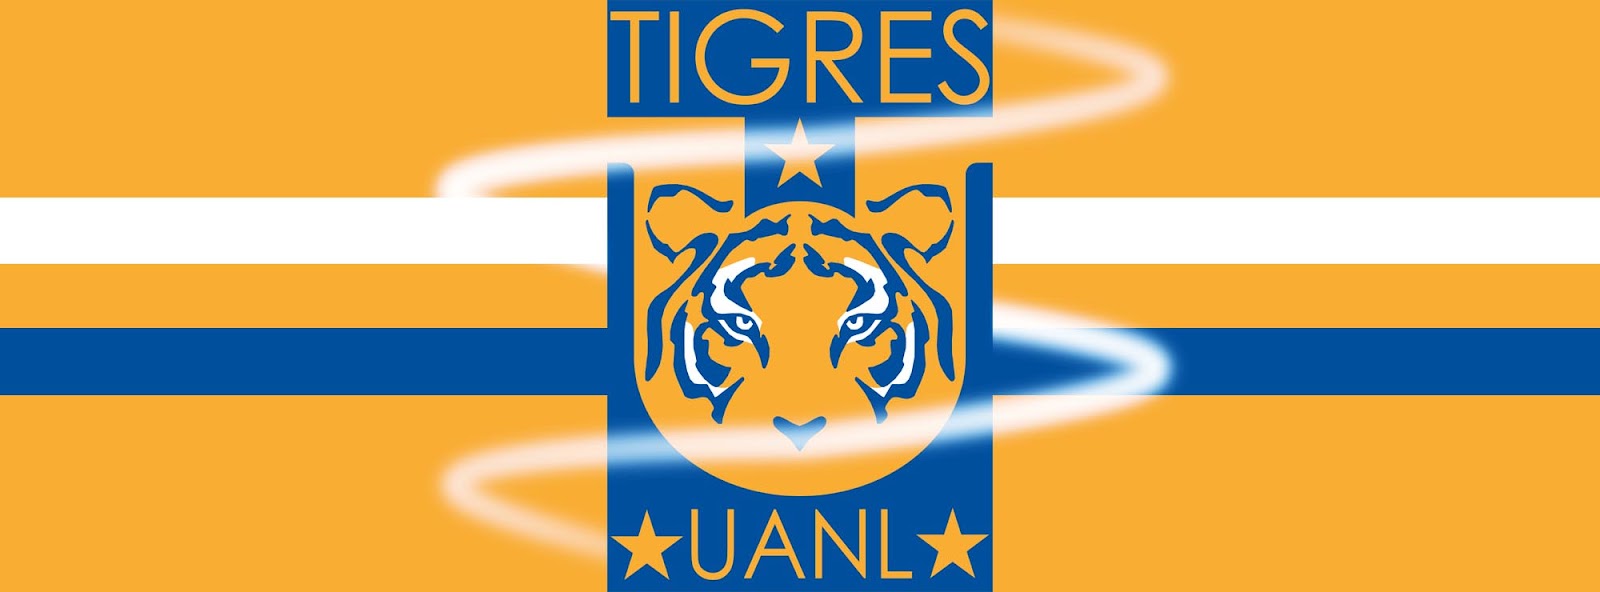 Portadas para Facebook de tigres uanl - Imagui